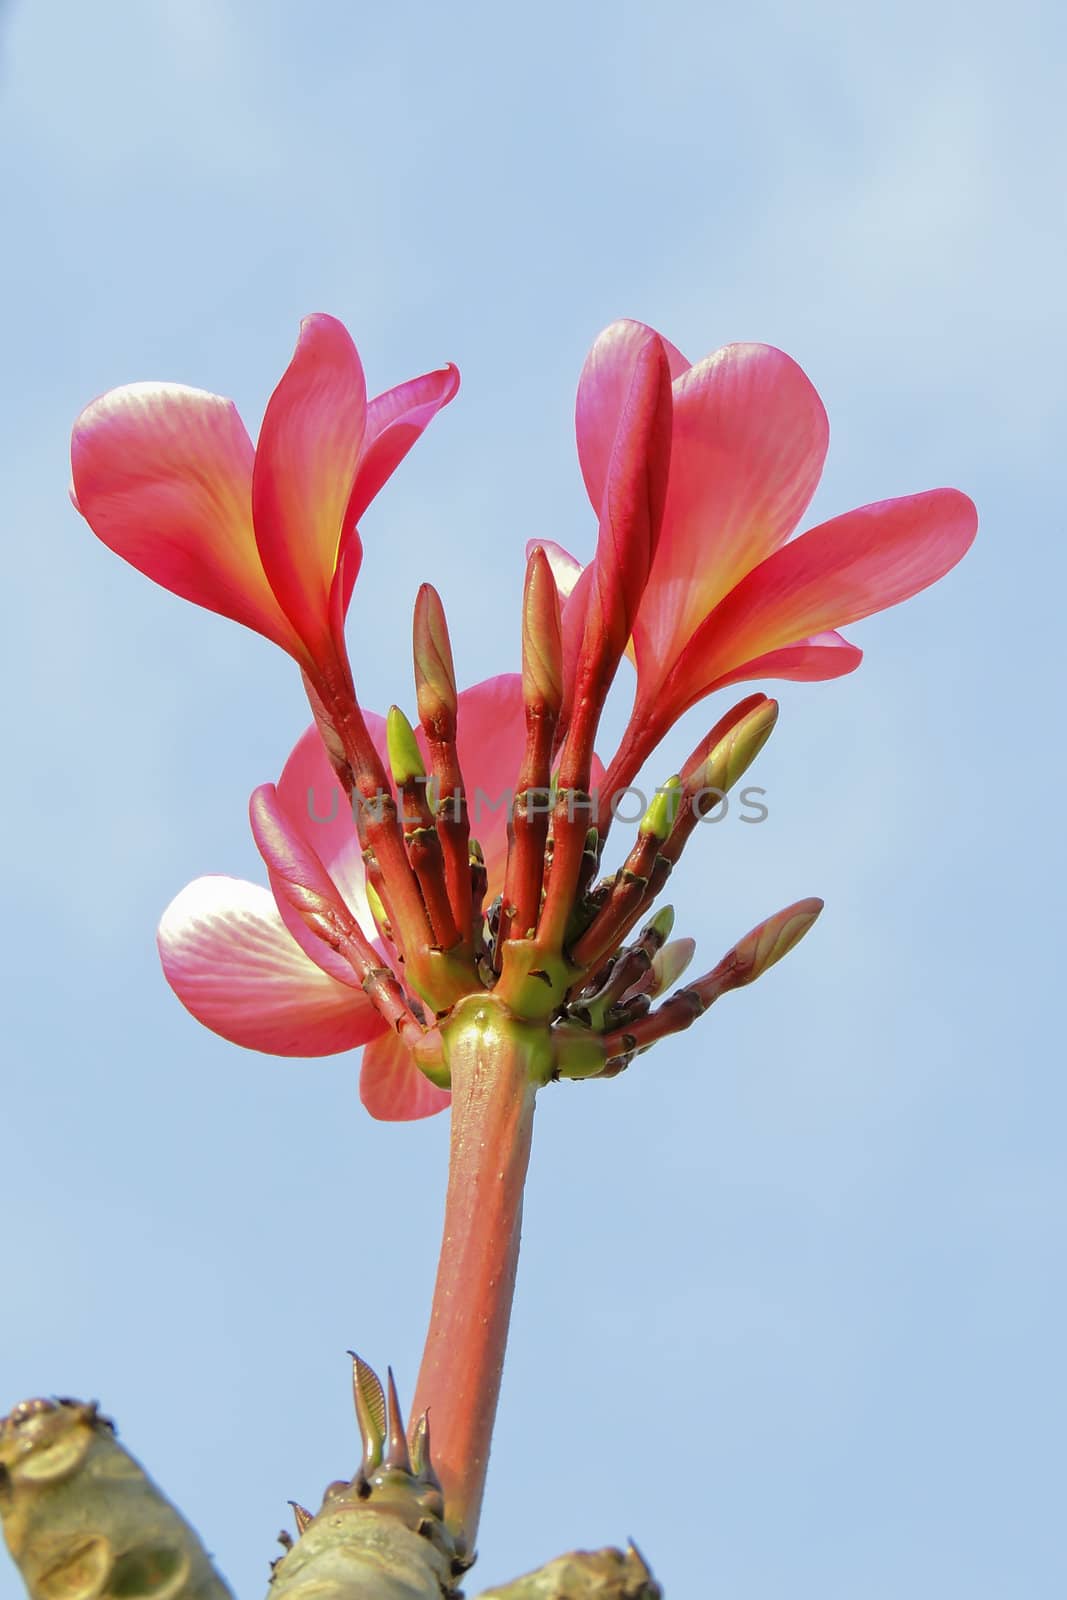 Red Frangipani flower bud by xfdly5